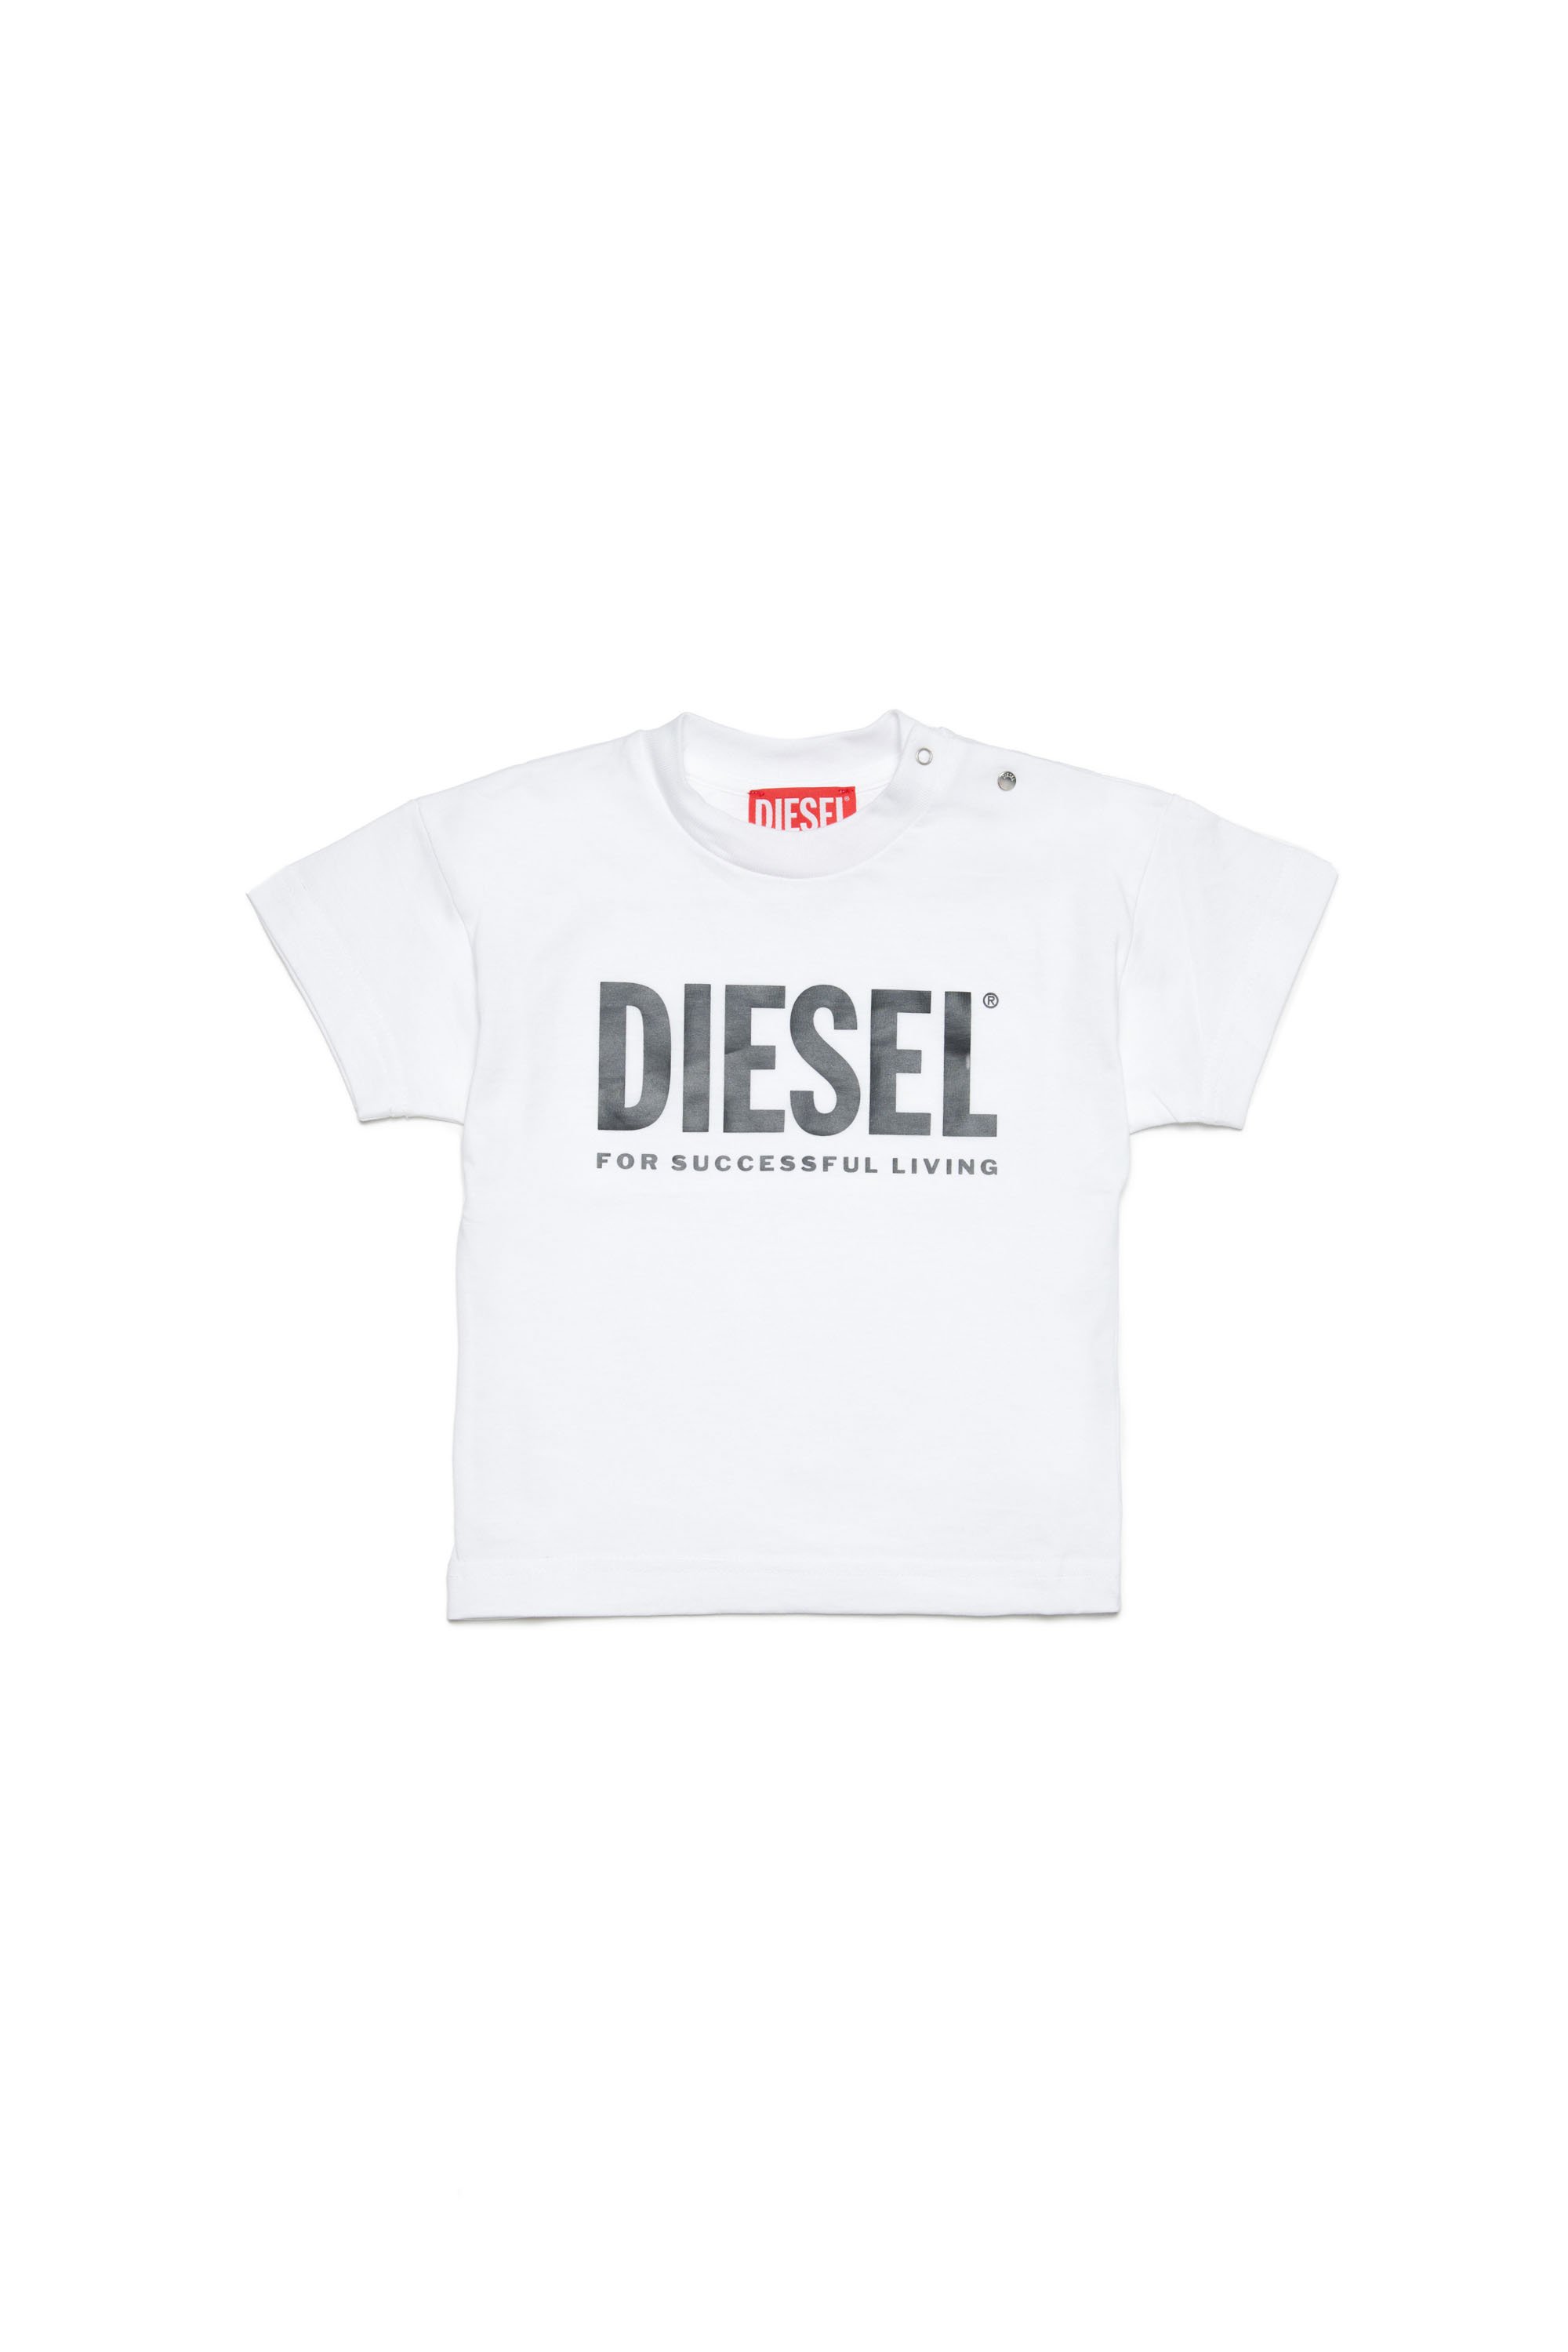 Diesel - TGIUB, White - Image 1